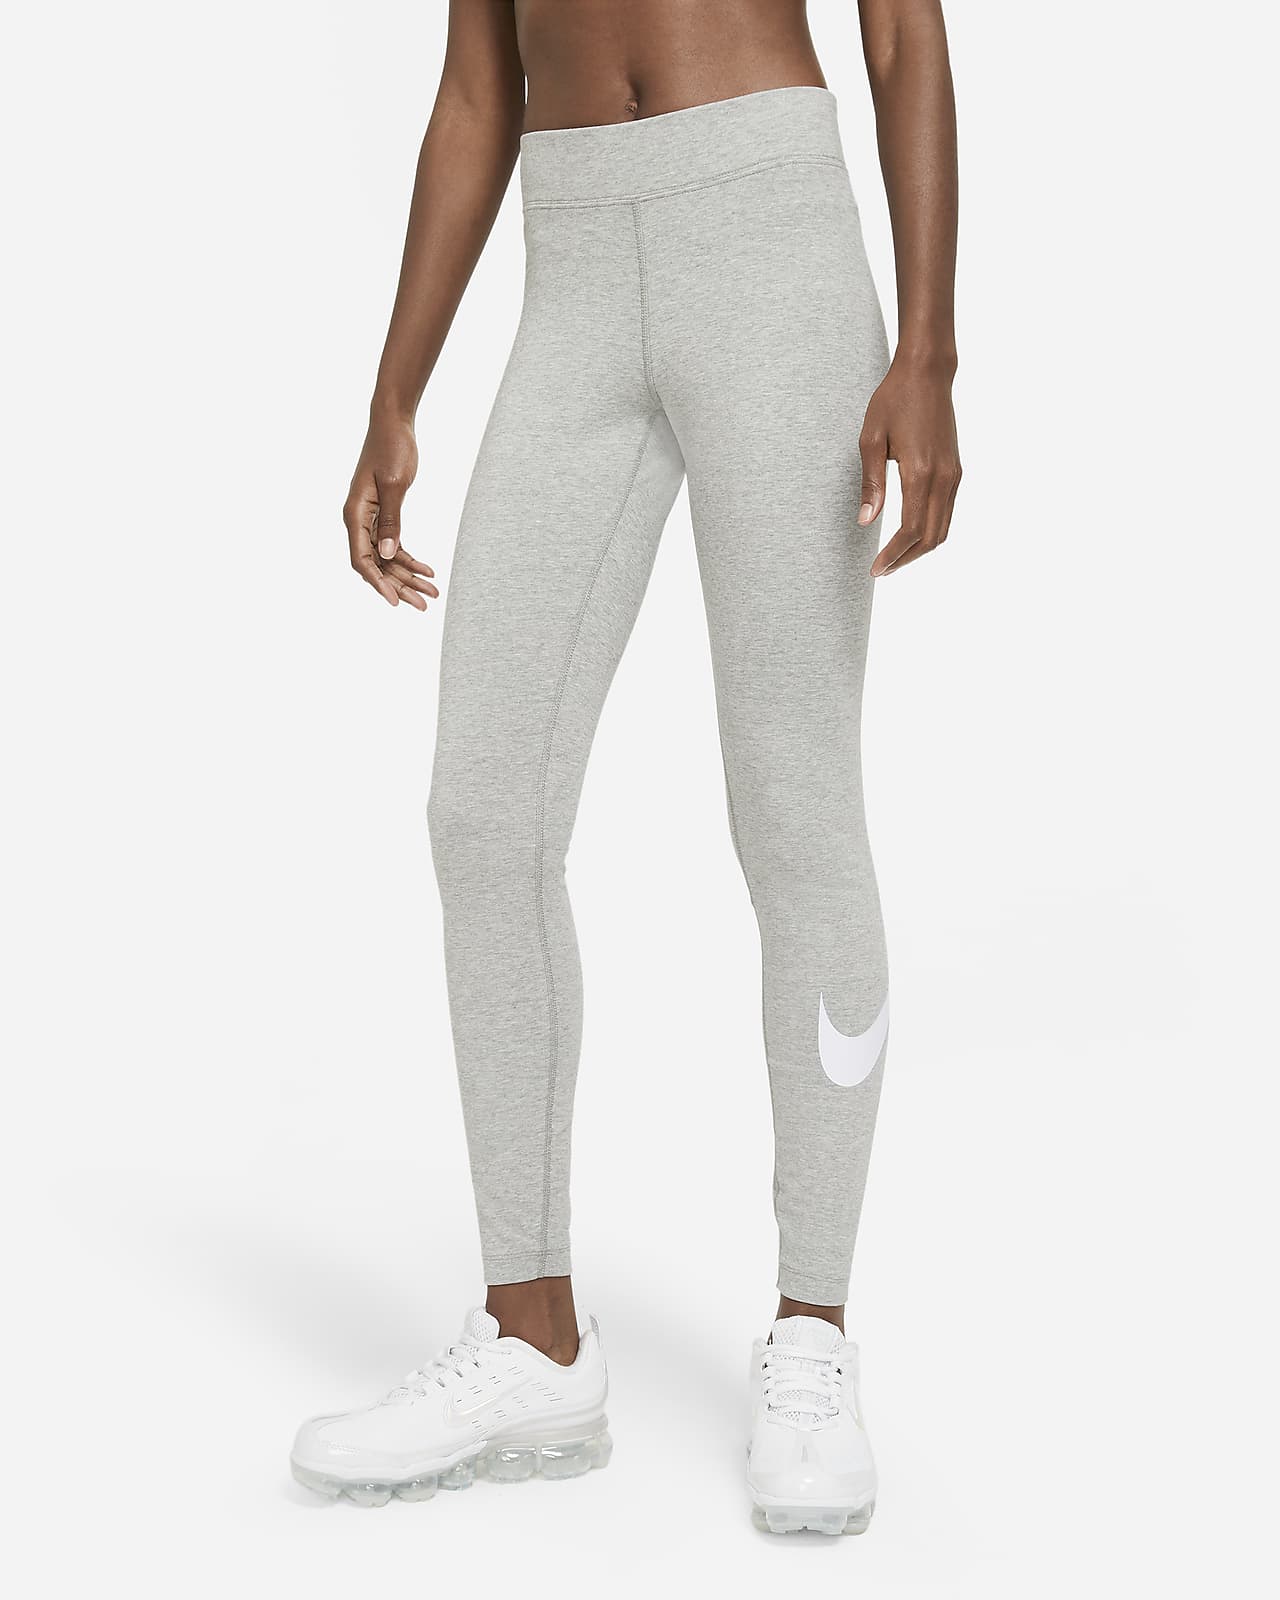 Nike Sportswear Essential Leggings amb cintura mitjana i logotip Swoosh - Dona